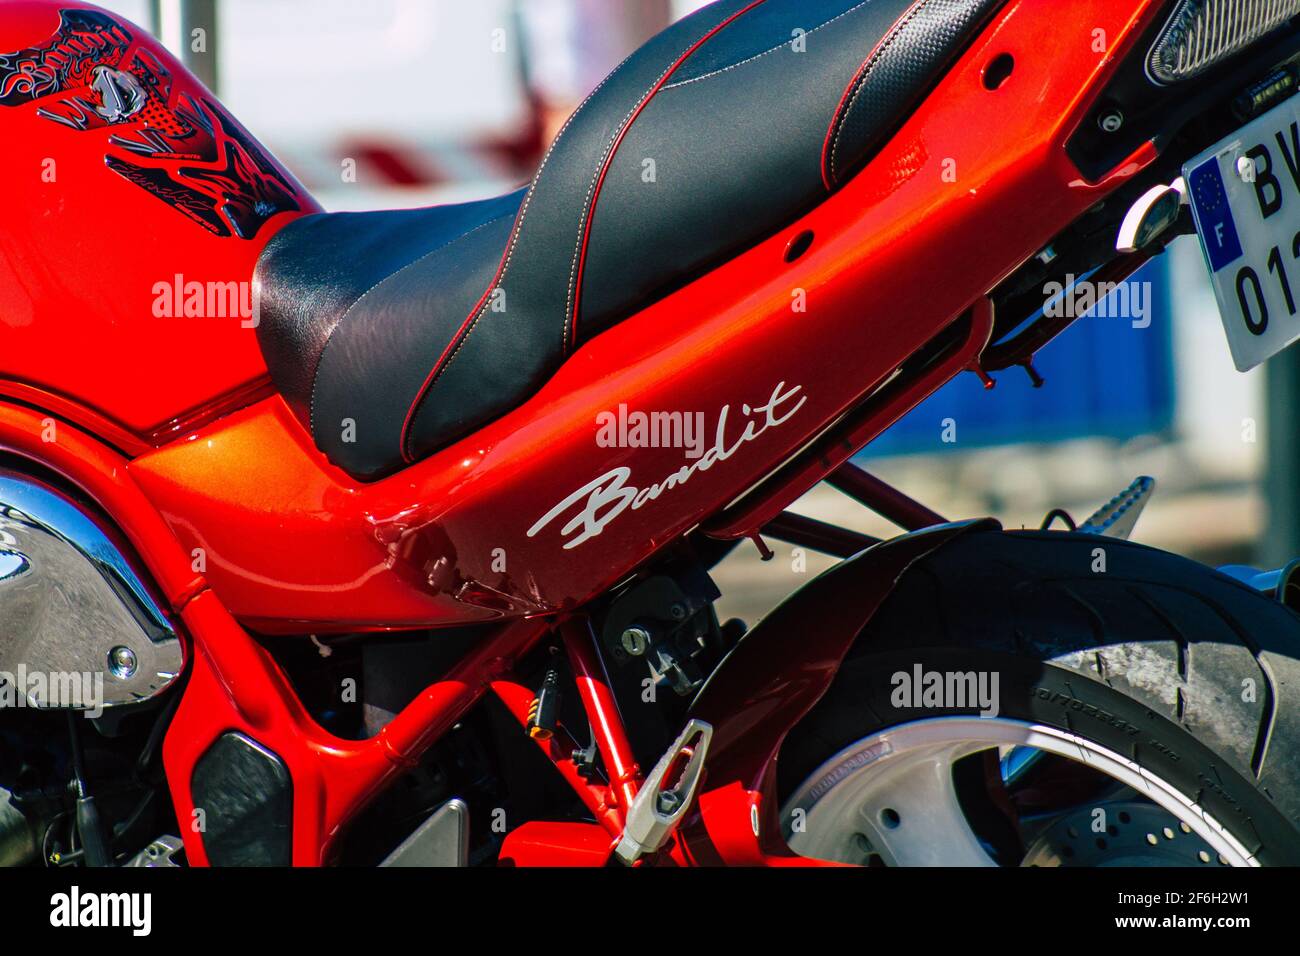 Suzuki bandit motorcycle hi-res stock photography and images - Alamy